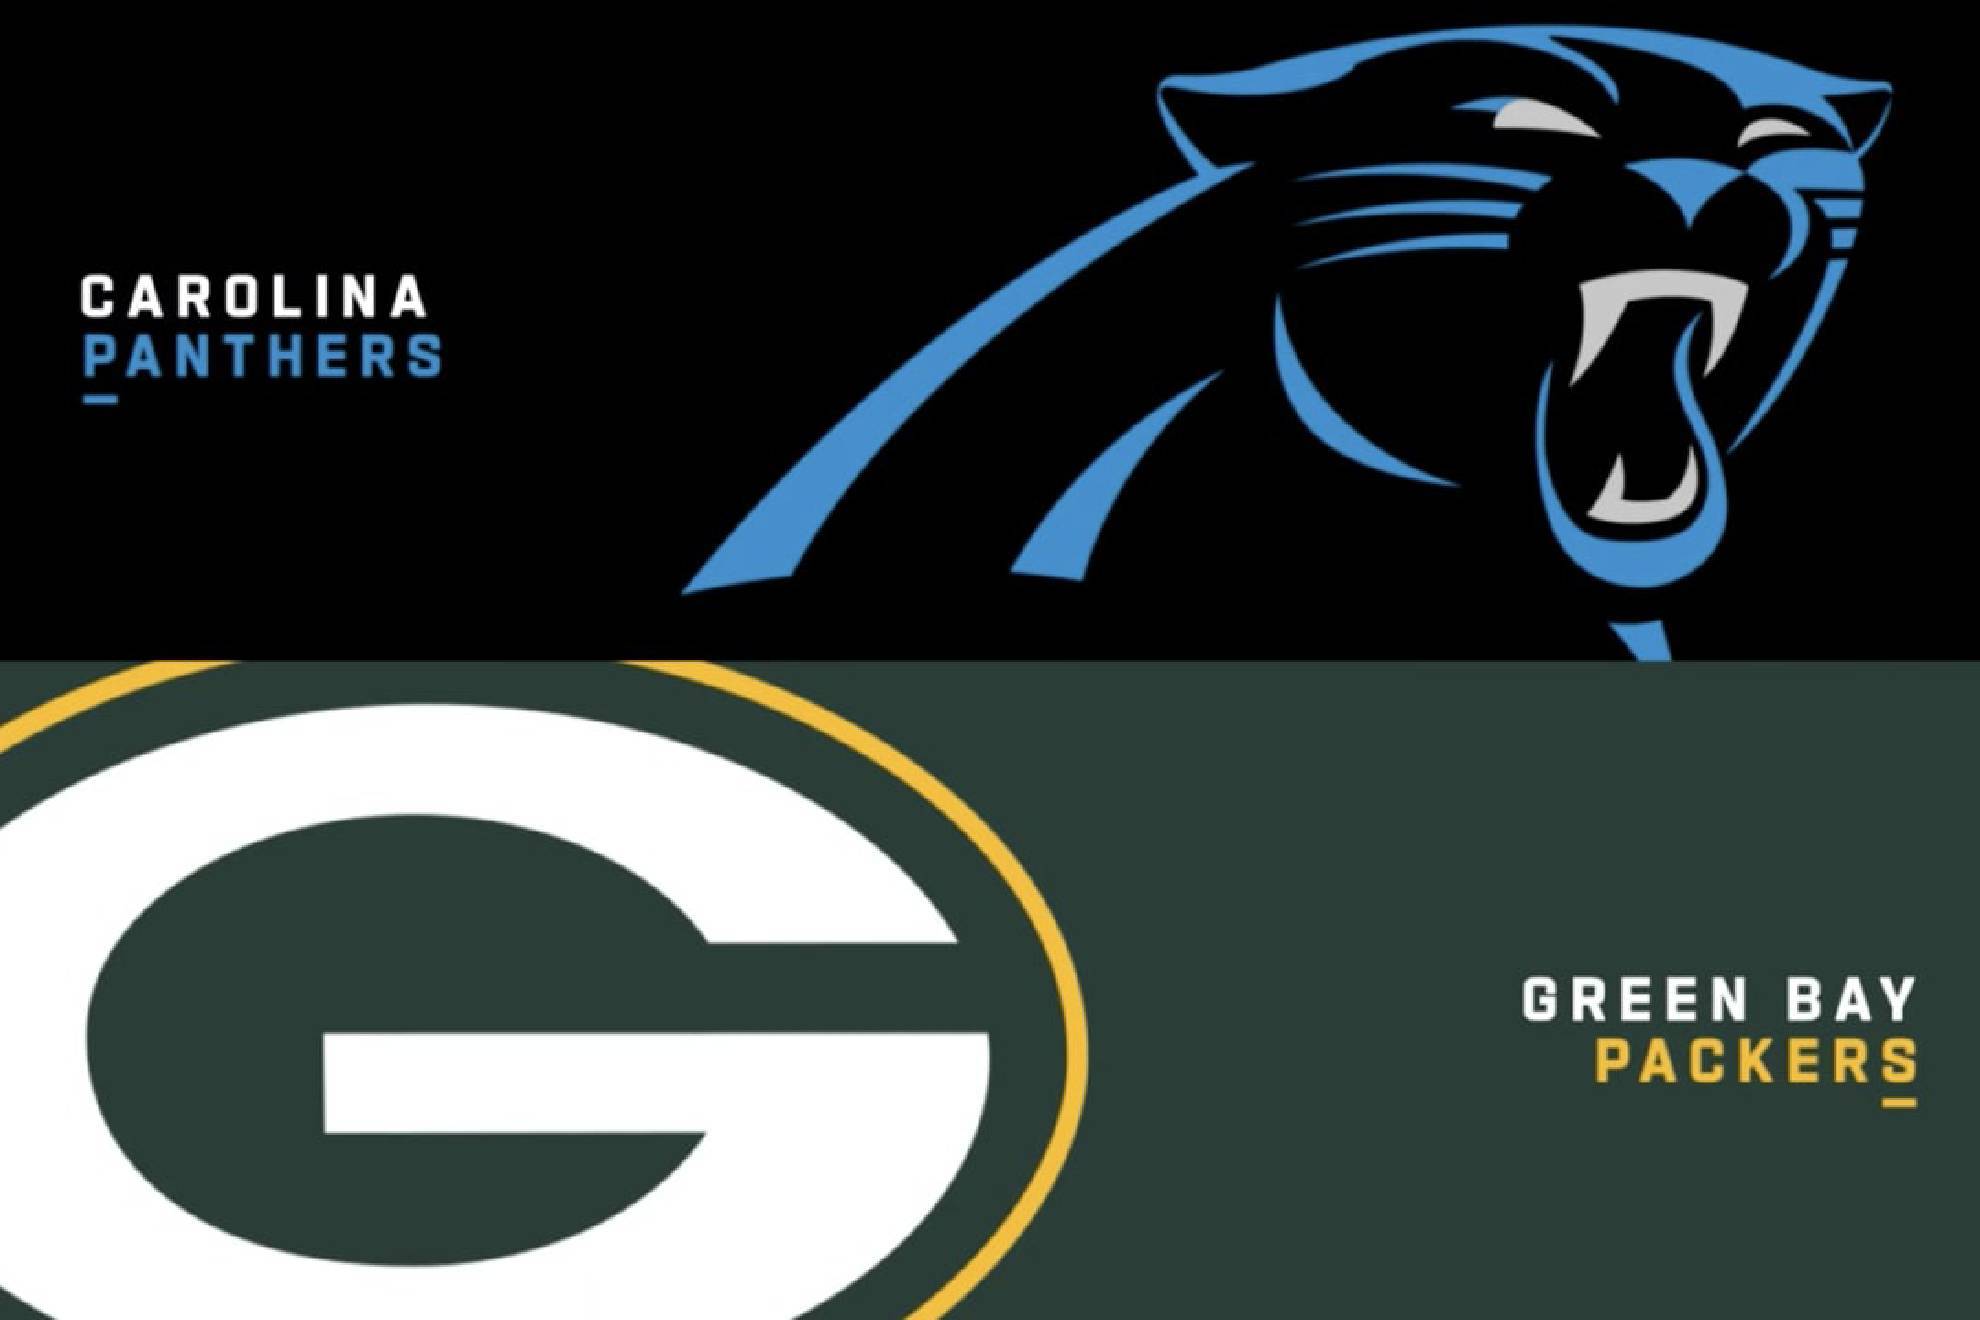 Carolina Panthers recibir a los Green Bay Packers en la temporad 2023 de la NFL.